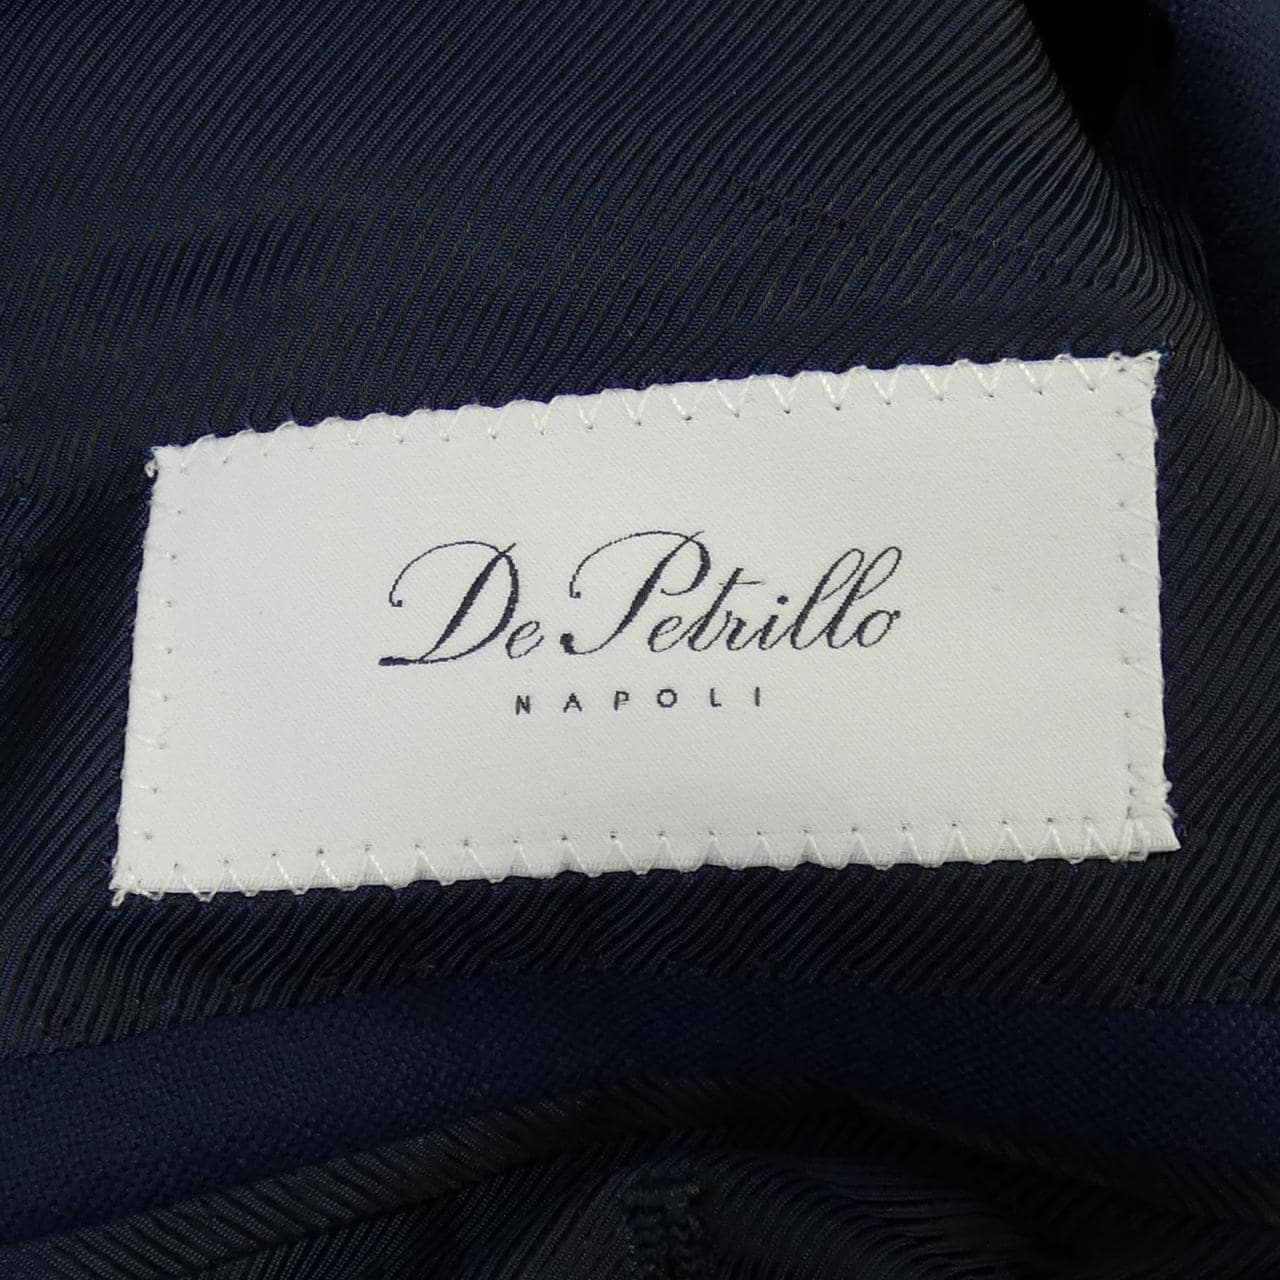 DE PETRILLO jacket